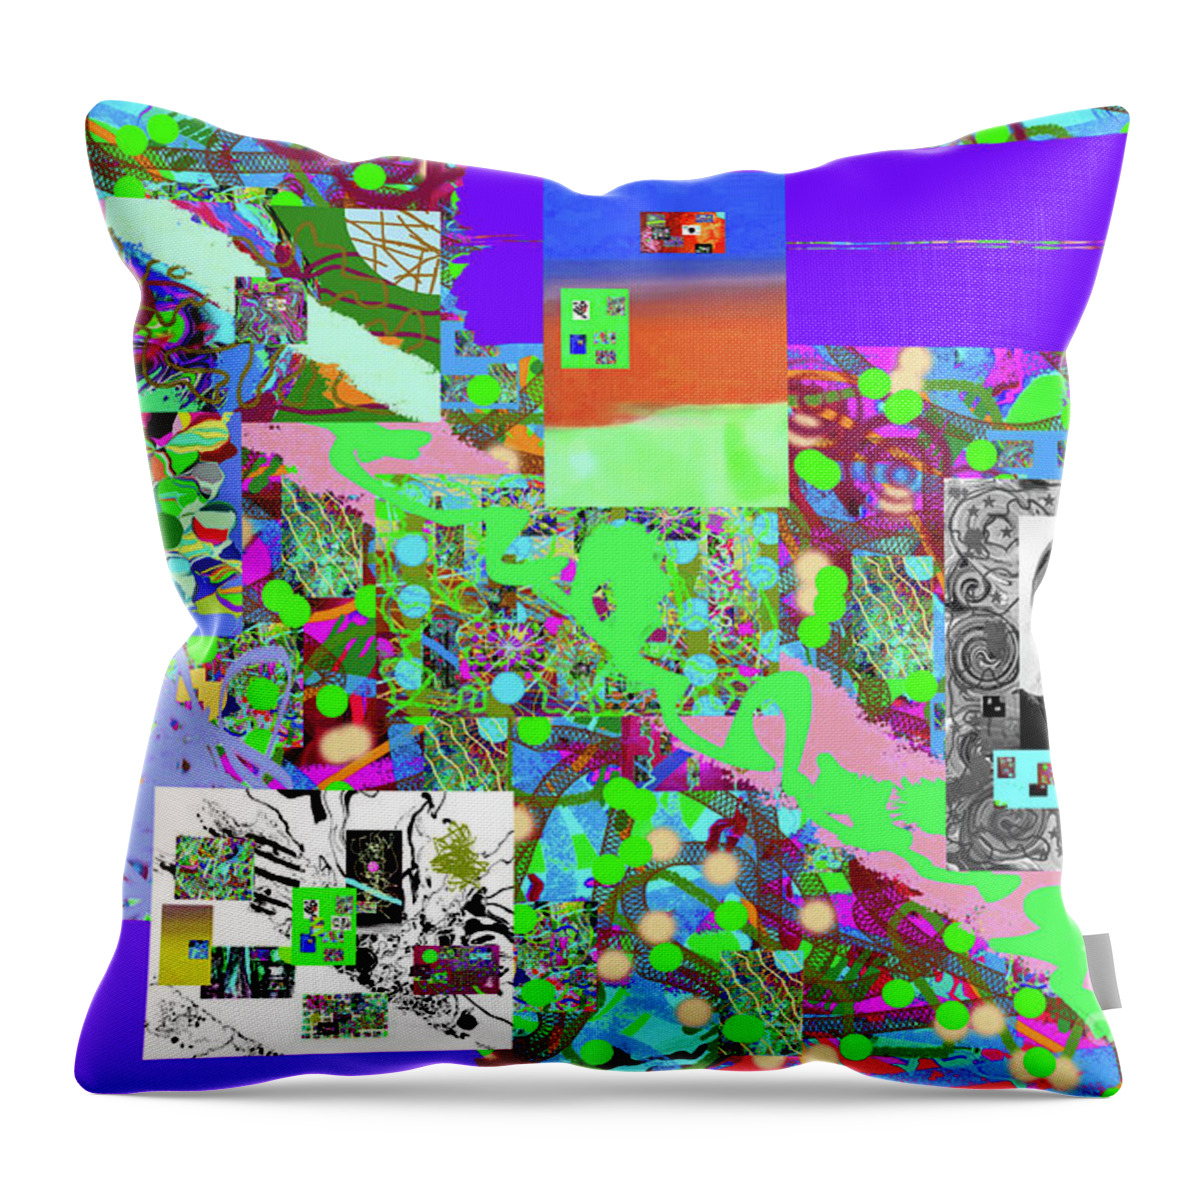 Walter Paul Bebirian Throw Pillow featuring the digital art 6-19-2015babcdefghijklm by Walter Paul Bebirian